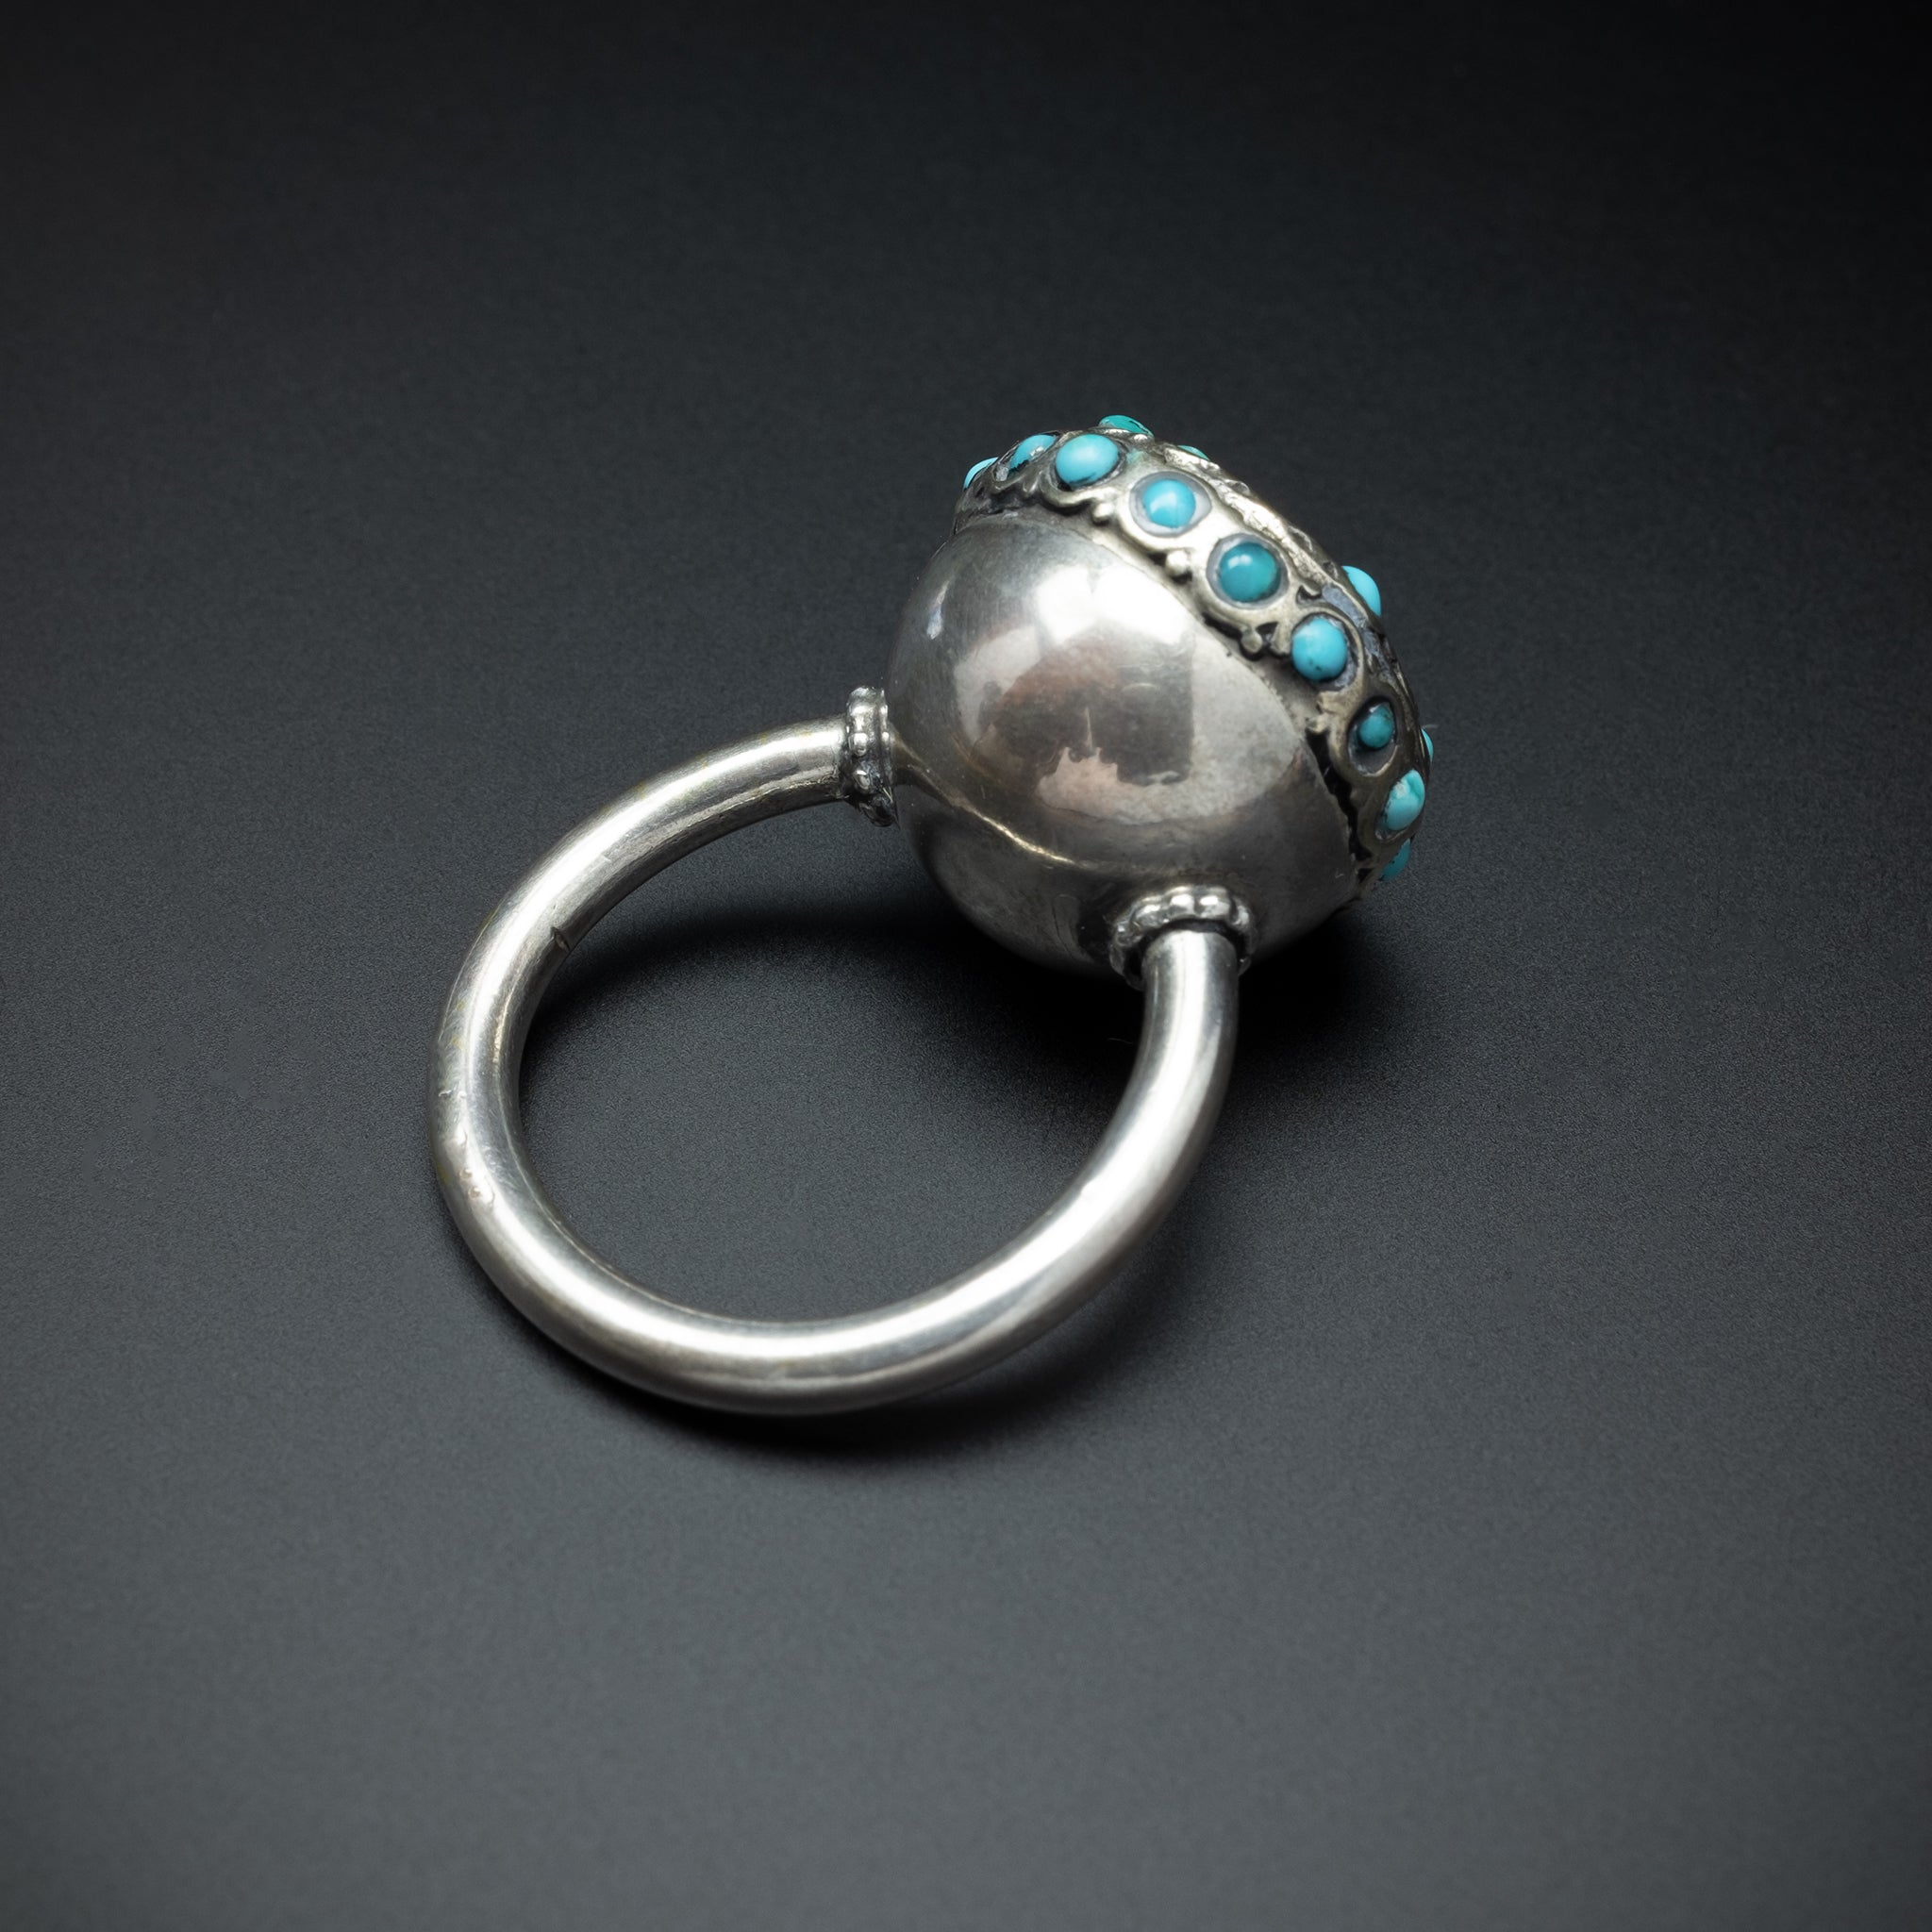 Vintage Silver and turquoise Ring, Bukhara, Uzbekistan